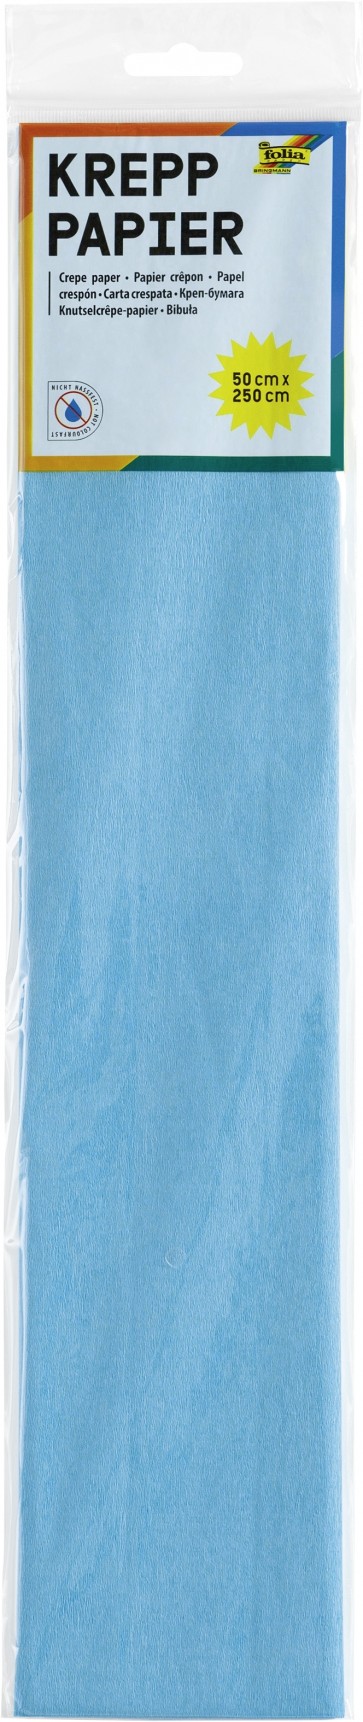 Kreppapīrs 250*50 cm Folia® gaiši zils